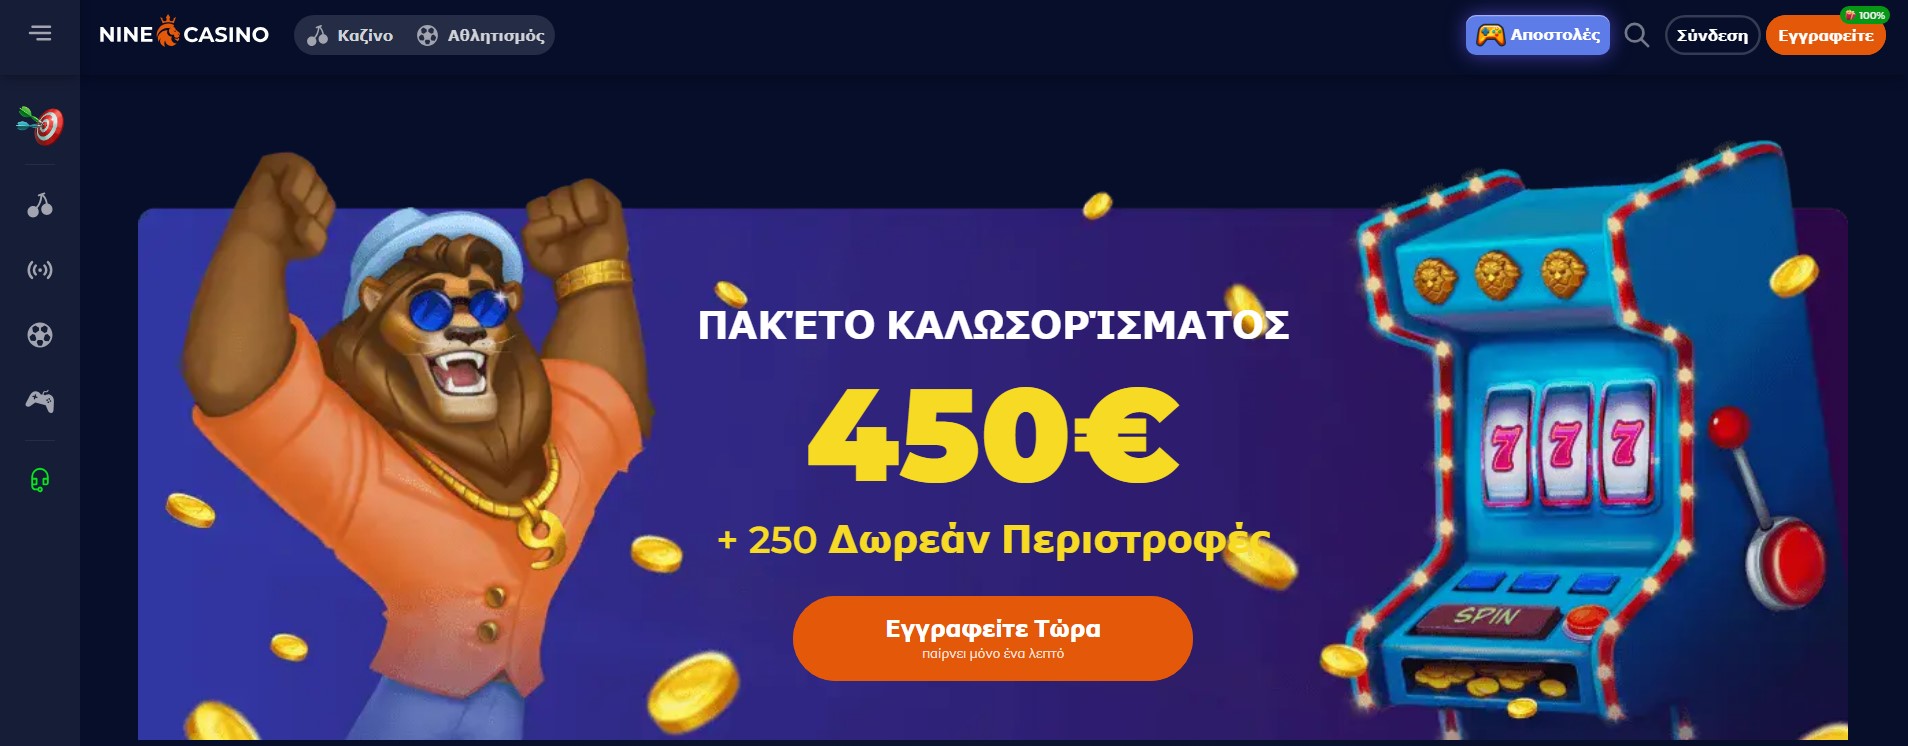 Nine Casino: προσφορές και μπόνους για τους παίκτες από την Ελλάδα